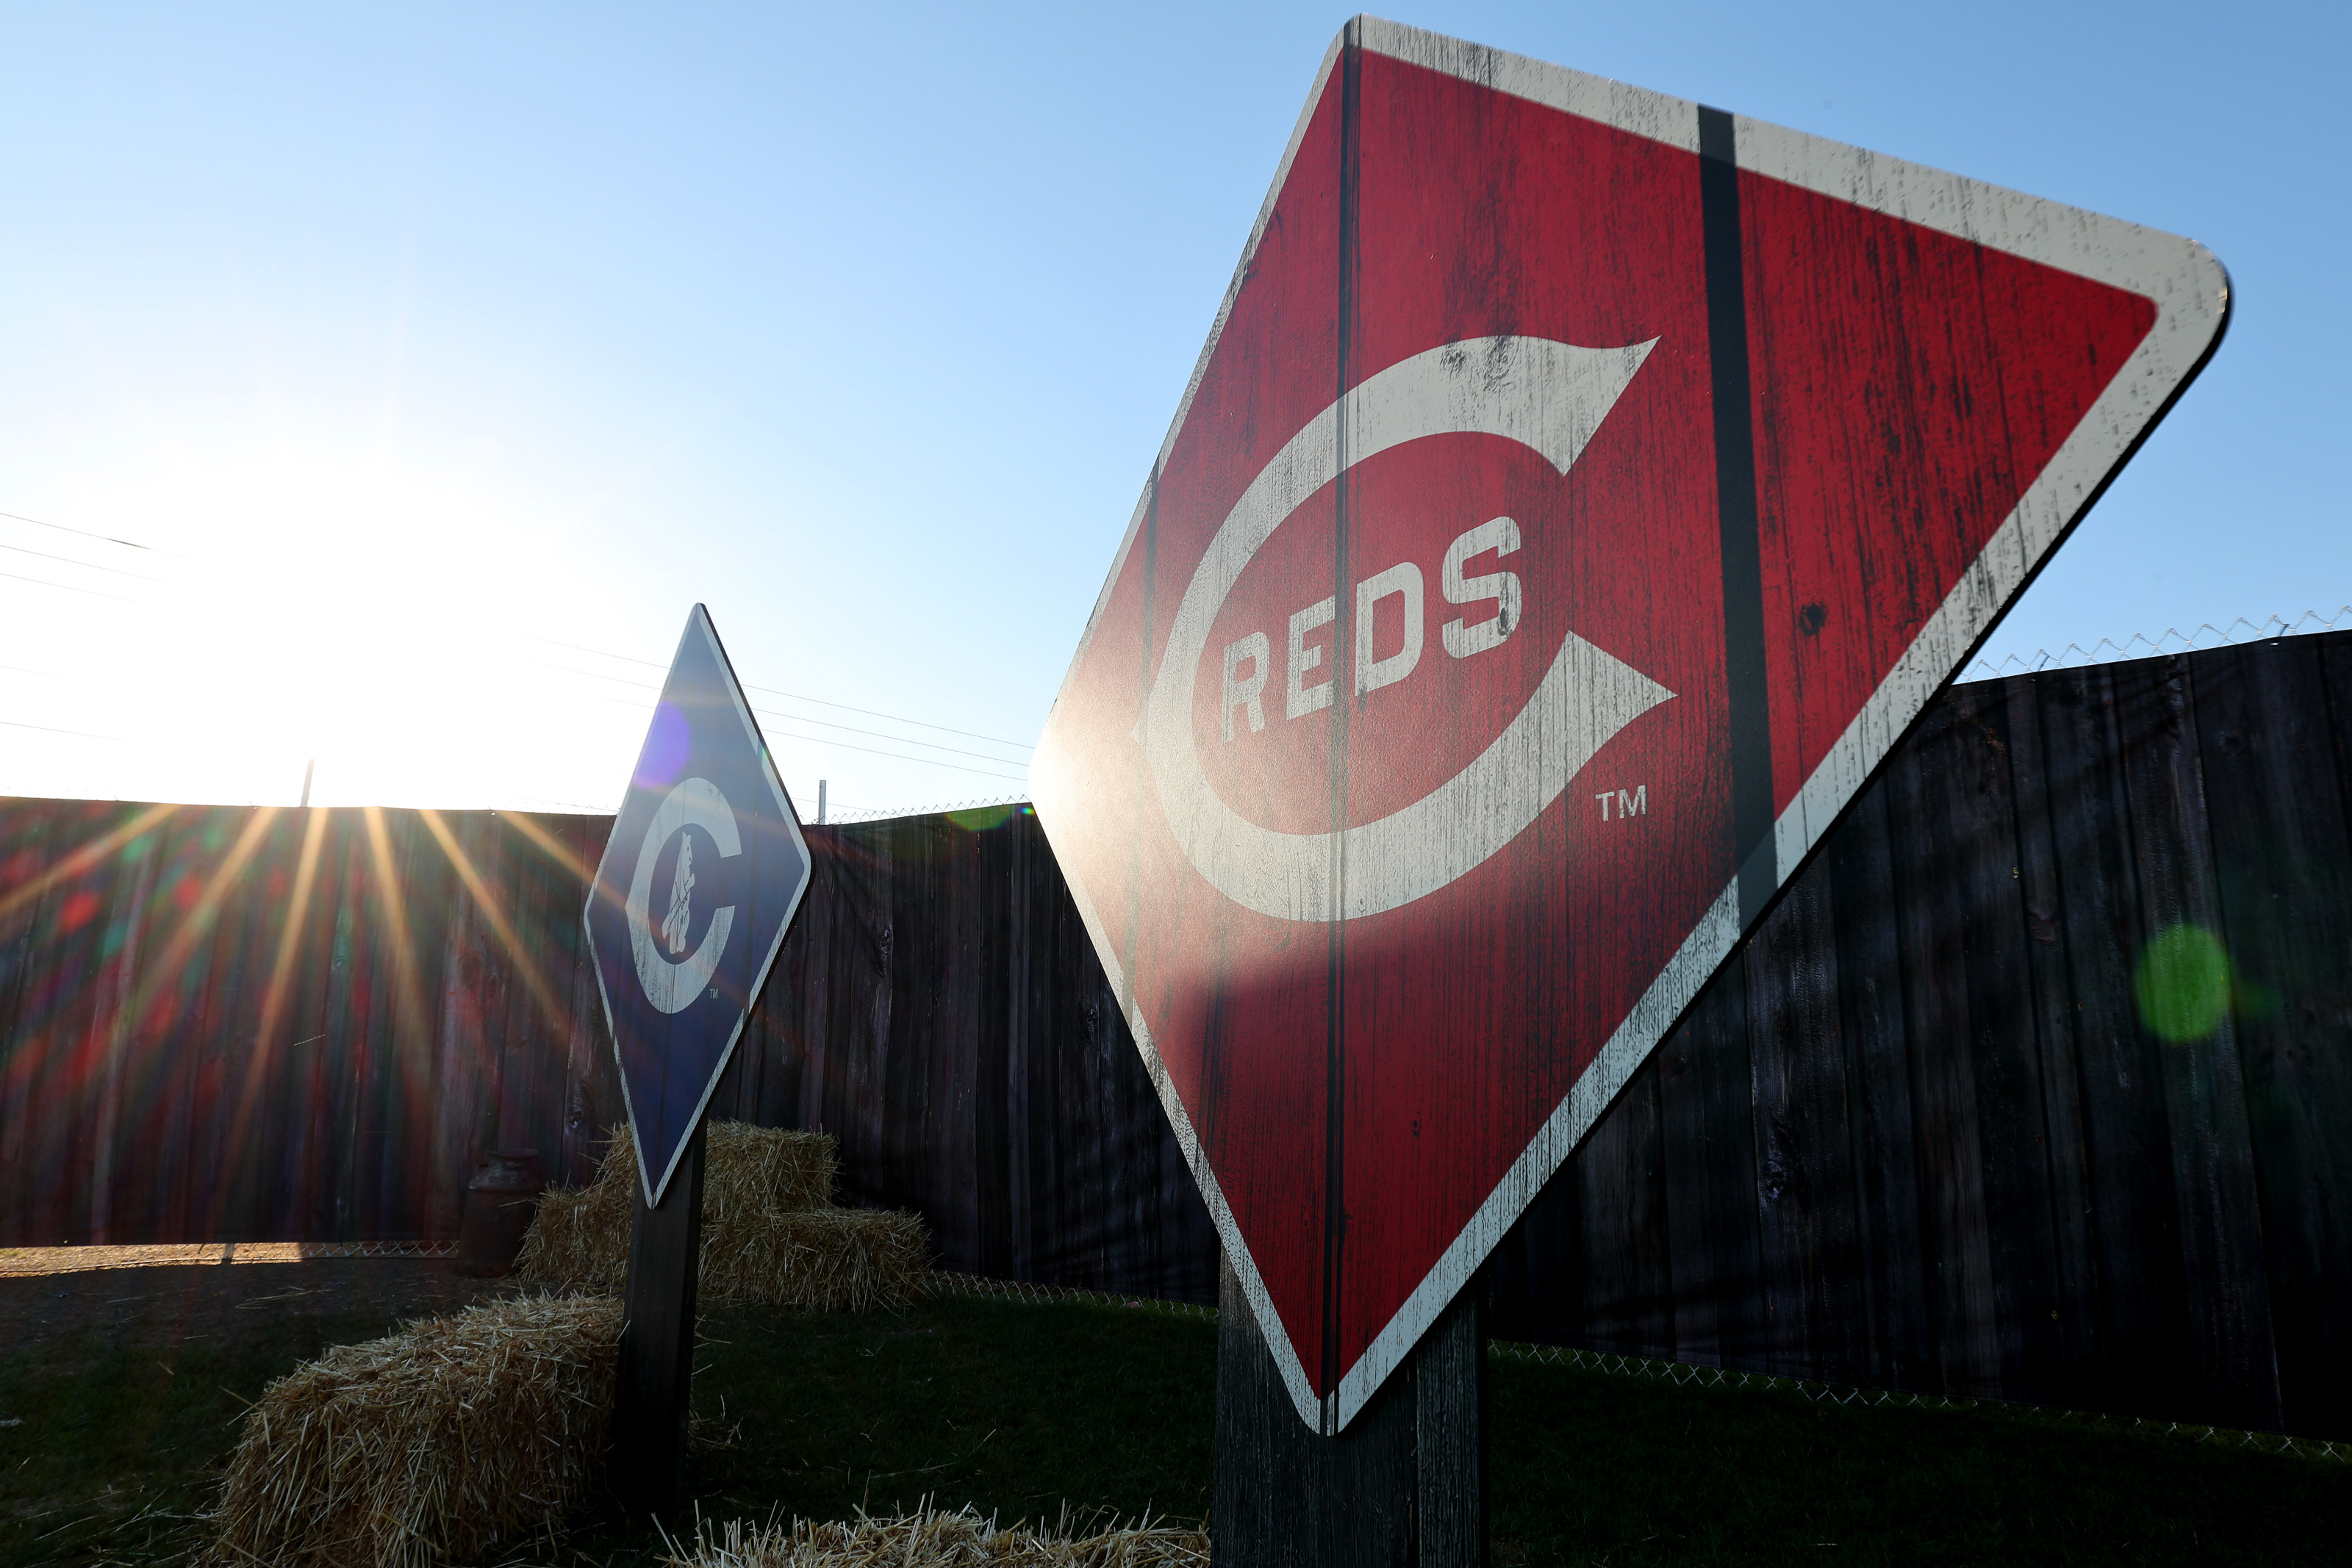 Field of Dreams game 2022: Chicago Cubs vs. Cincinnati Reds TV